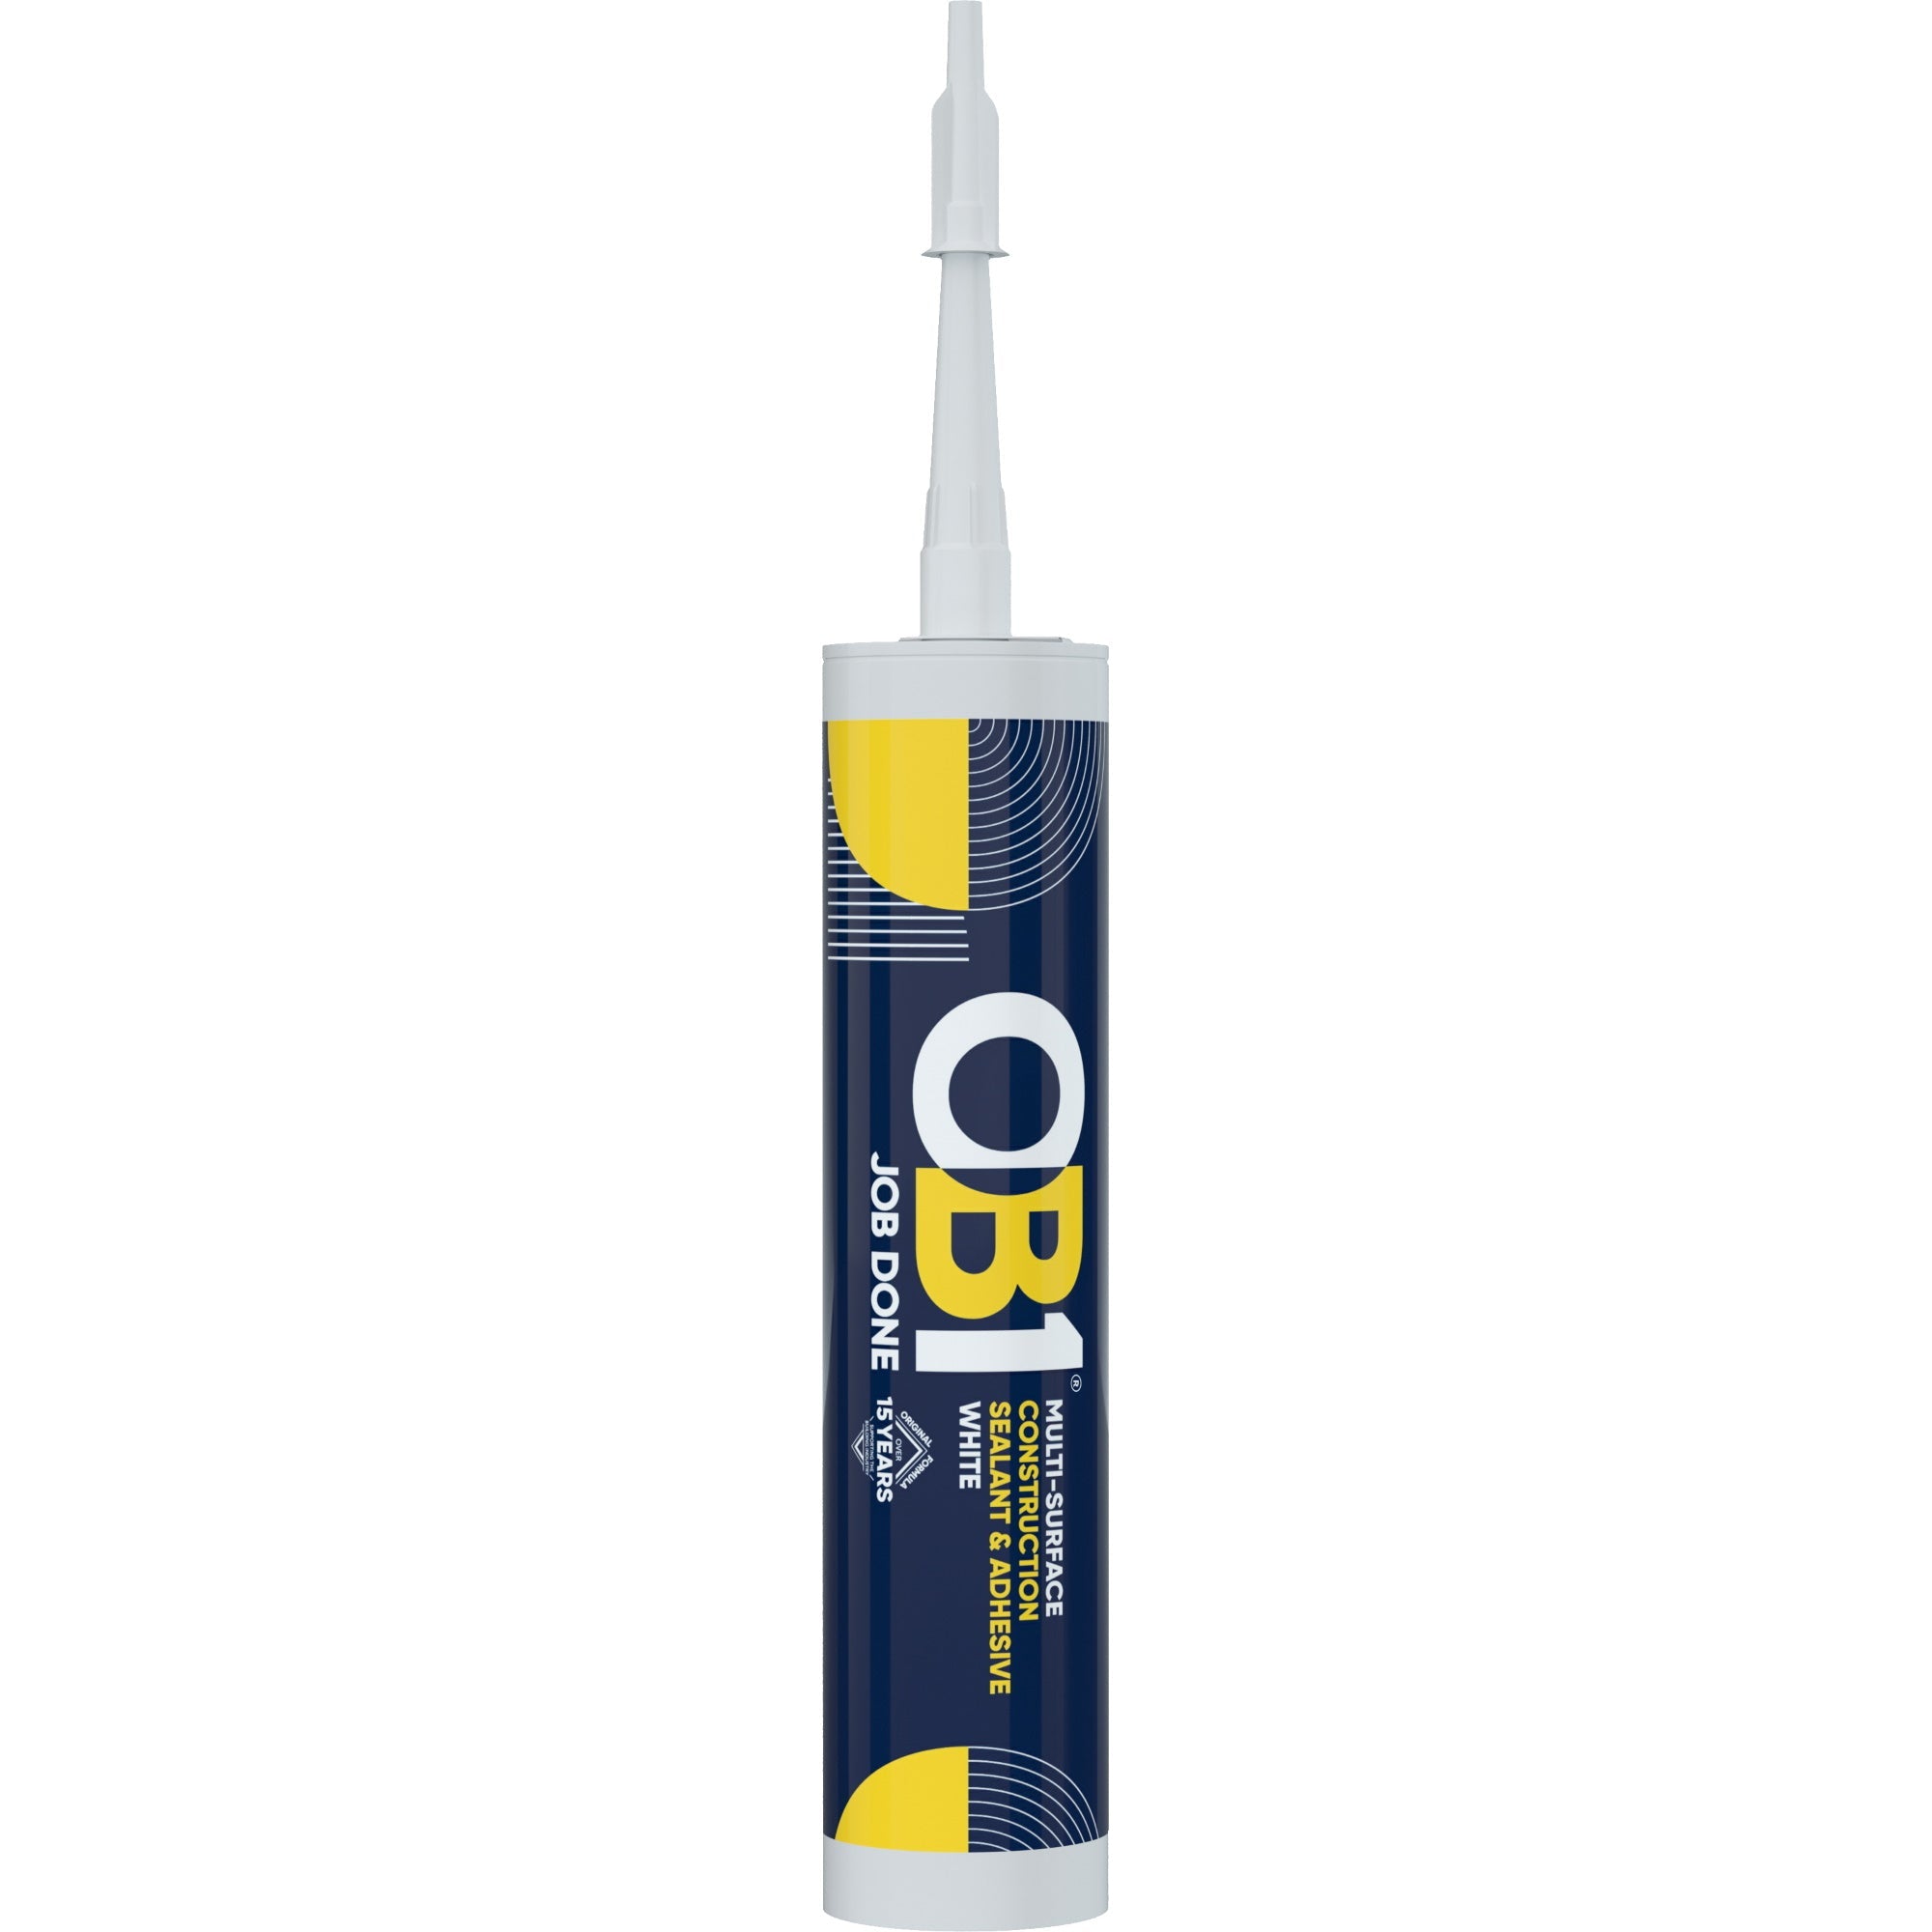 OB1 Job Done Multi-Surface Sealant & Adhesive 290ml Cartridge - White - Premium Sealants from Bostik - Just $12.5! Shop now at W Hurst & Son (IW) Ltd